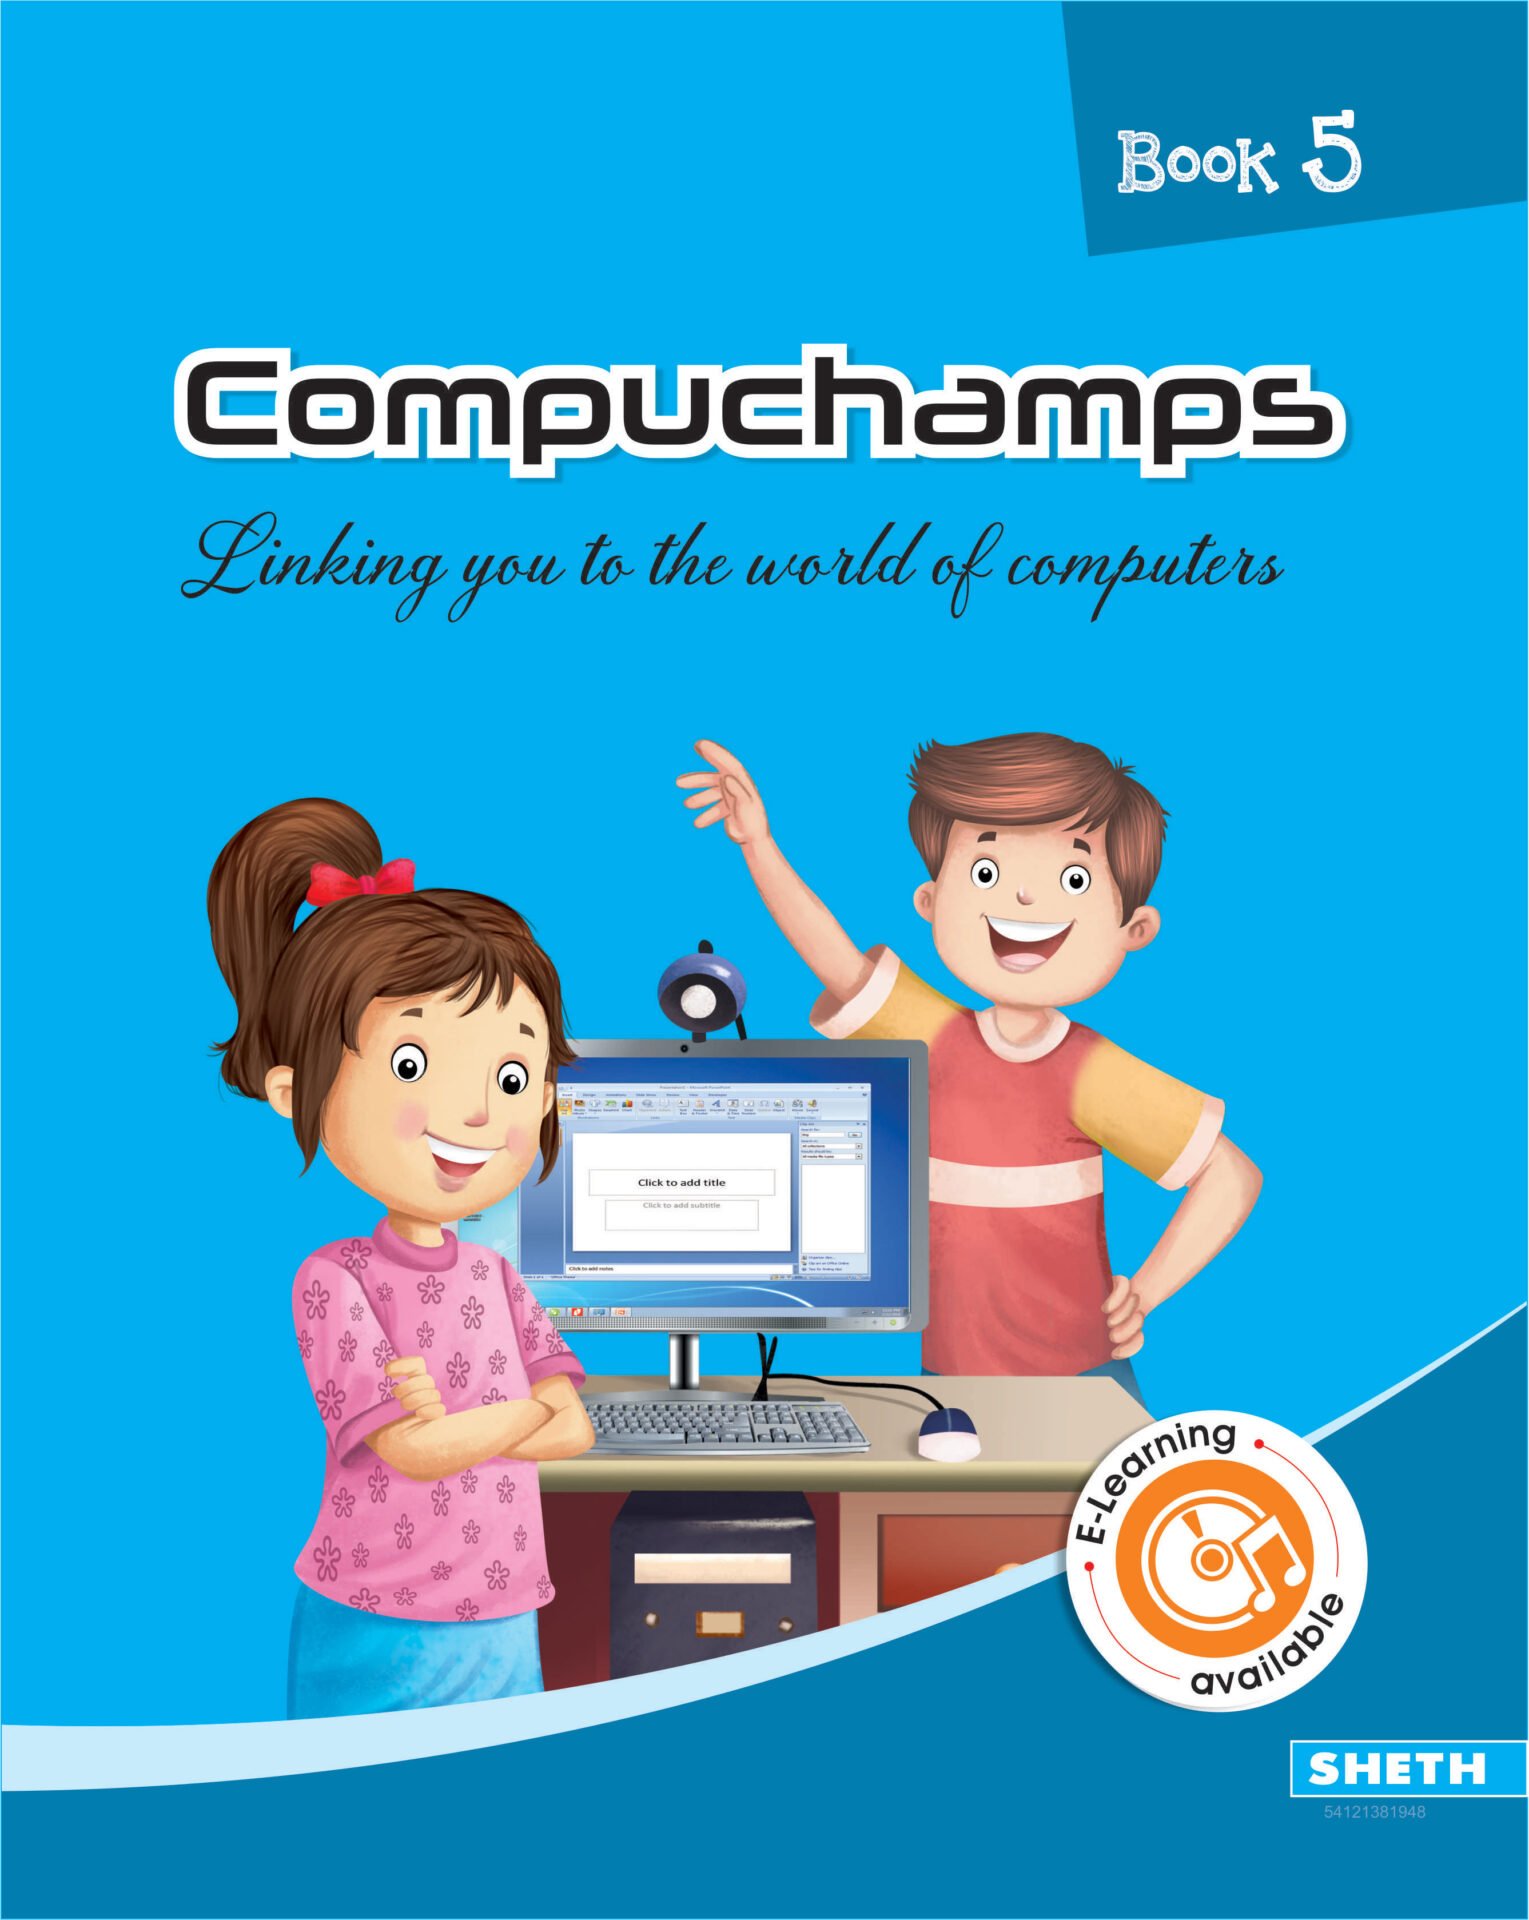 Compuchamps Book 5 1 1